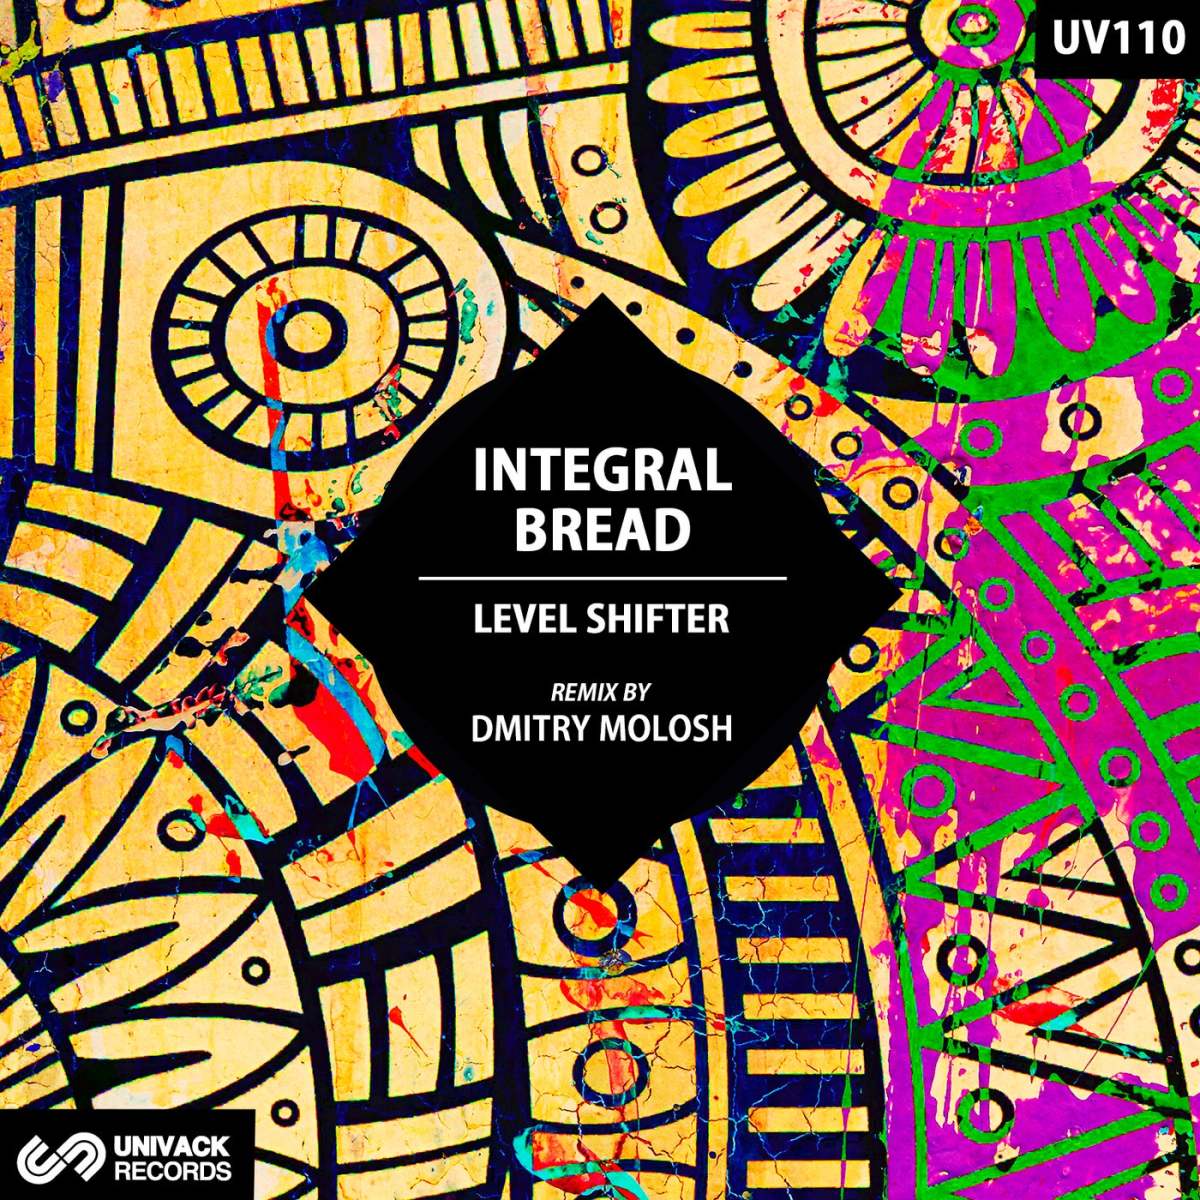 Integral Bread - Level Shifter (Dmitry Molosh Remix) - Univack Records